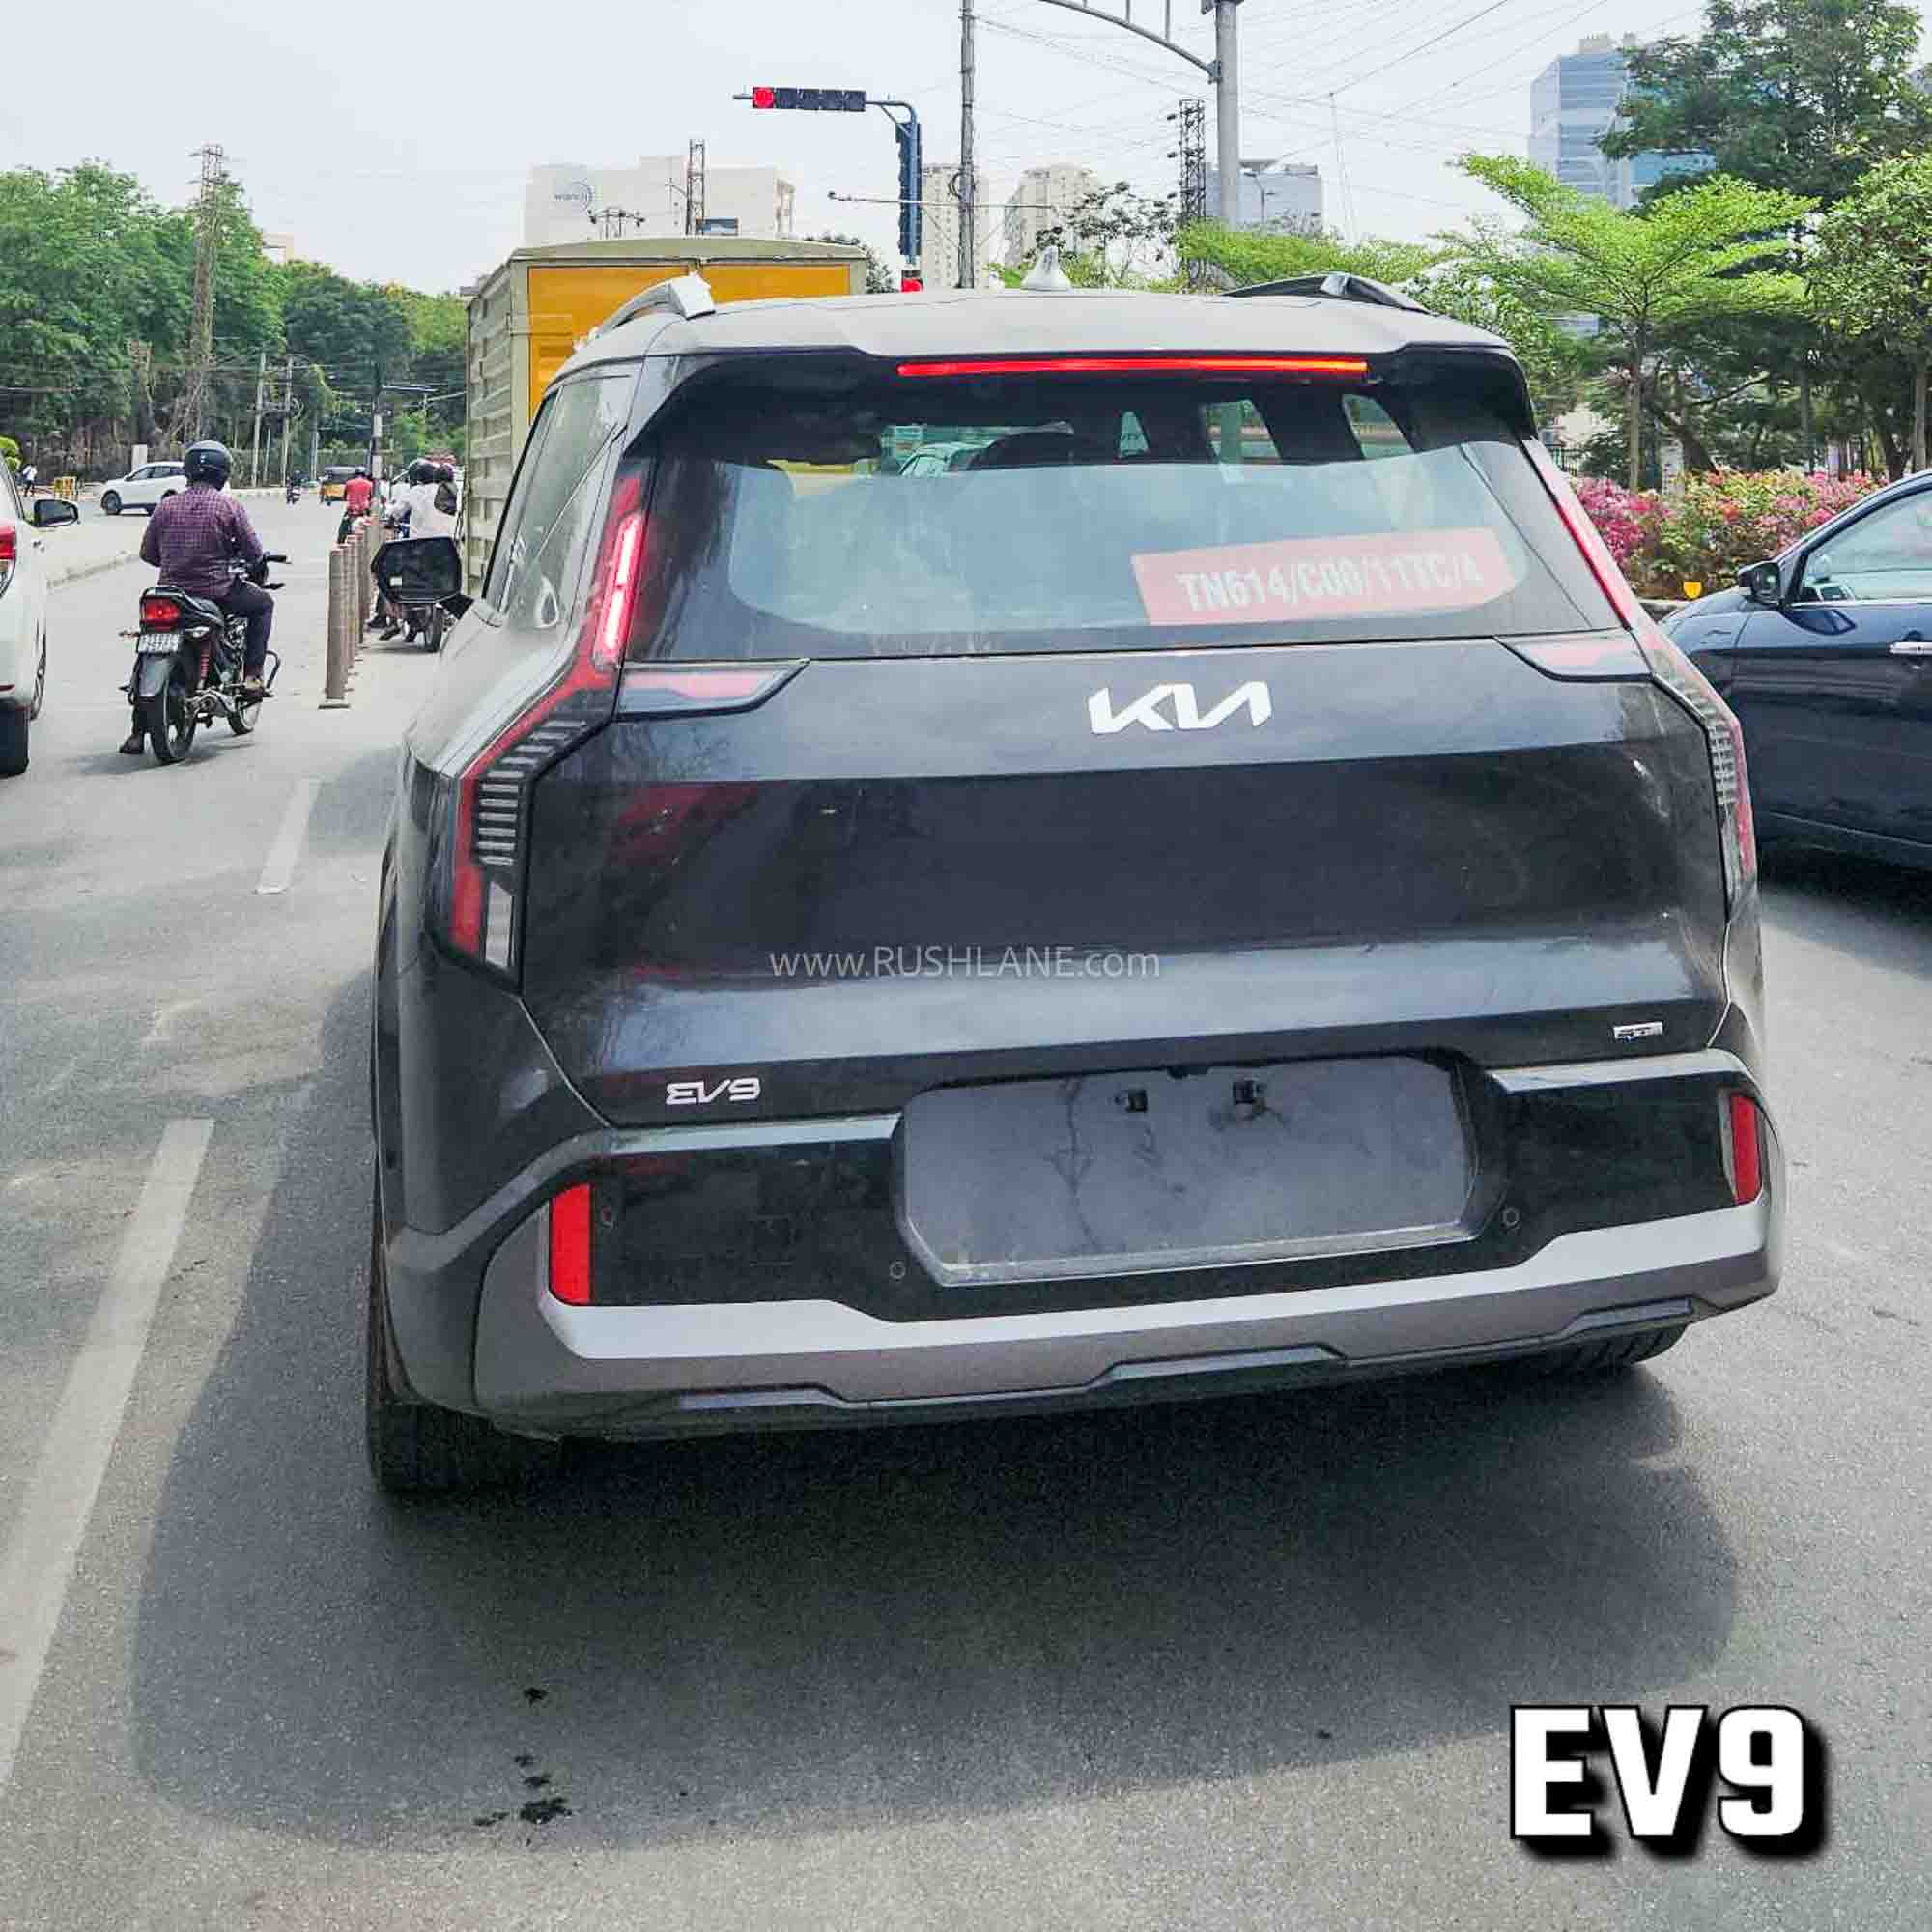 Kia EV9 on test in India